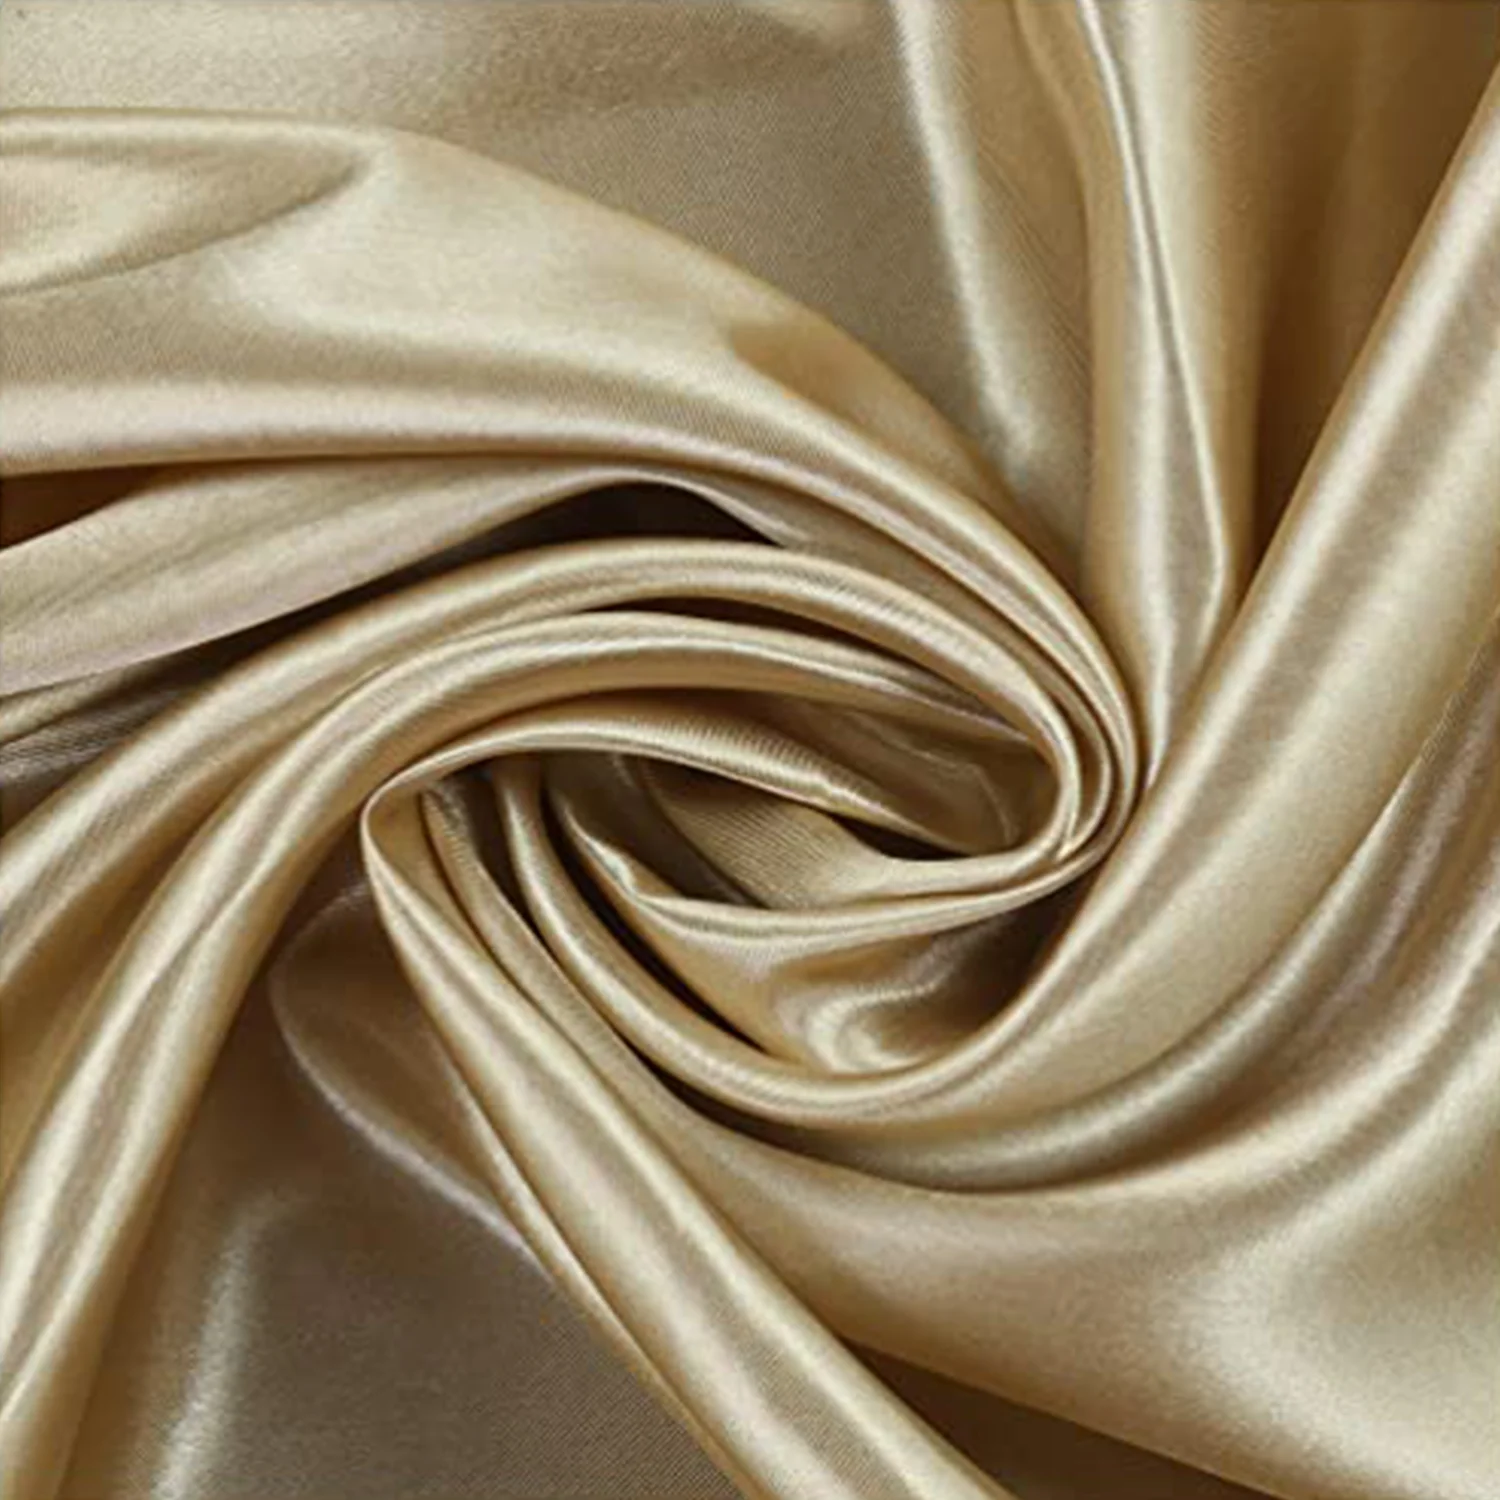 Wensli Customized Floral Printed Ice Tie Dye Satin Silk Fabric 16mm 114cm Heavy 100% Pure Silk Fabric For Dress Pajamas